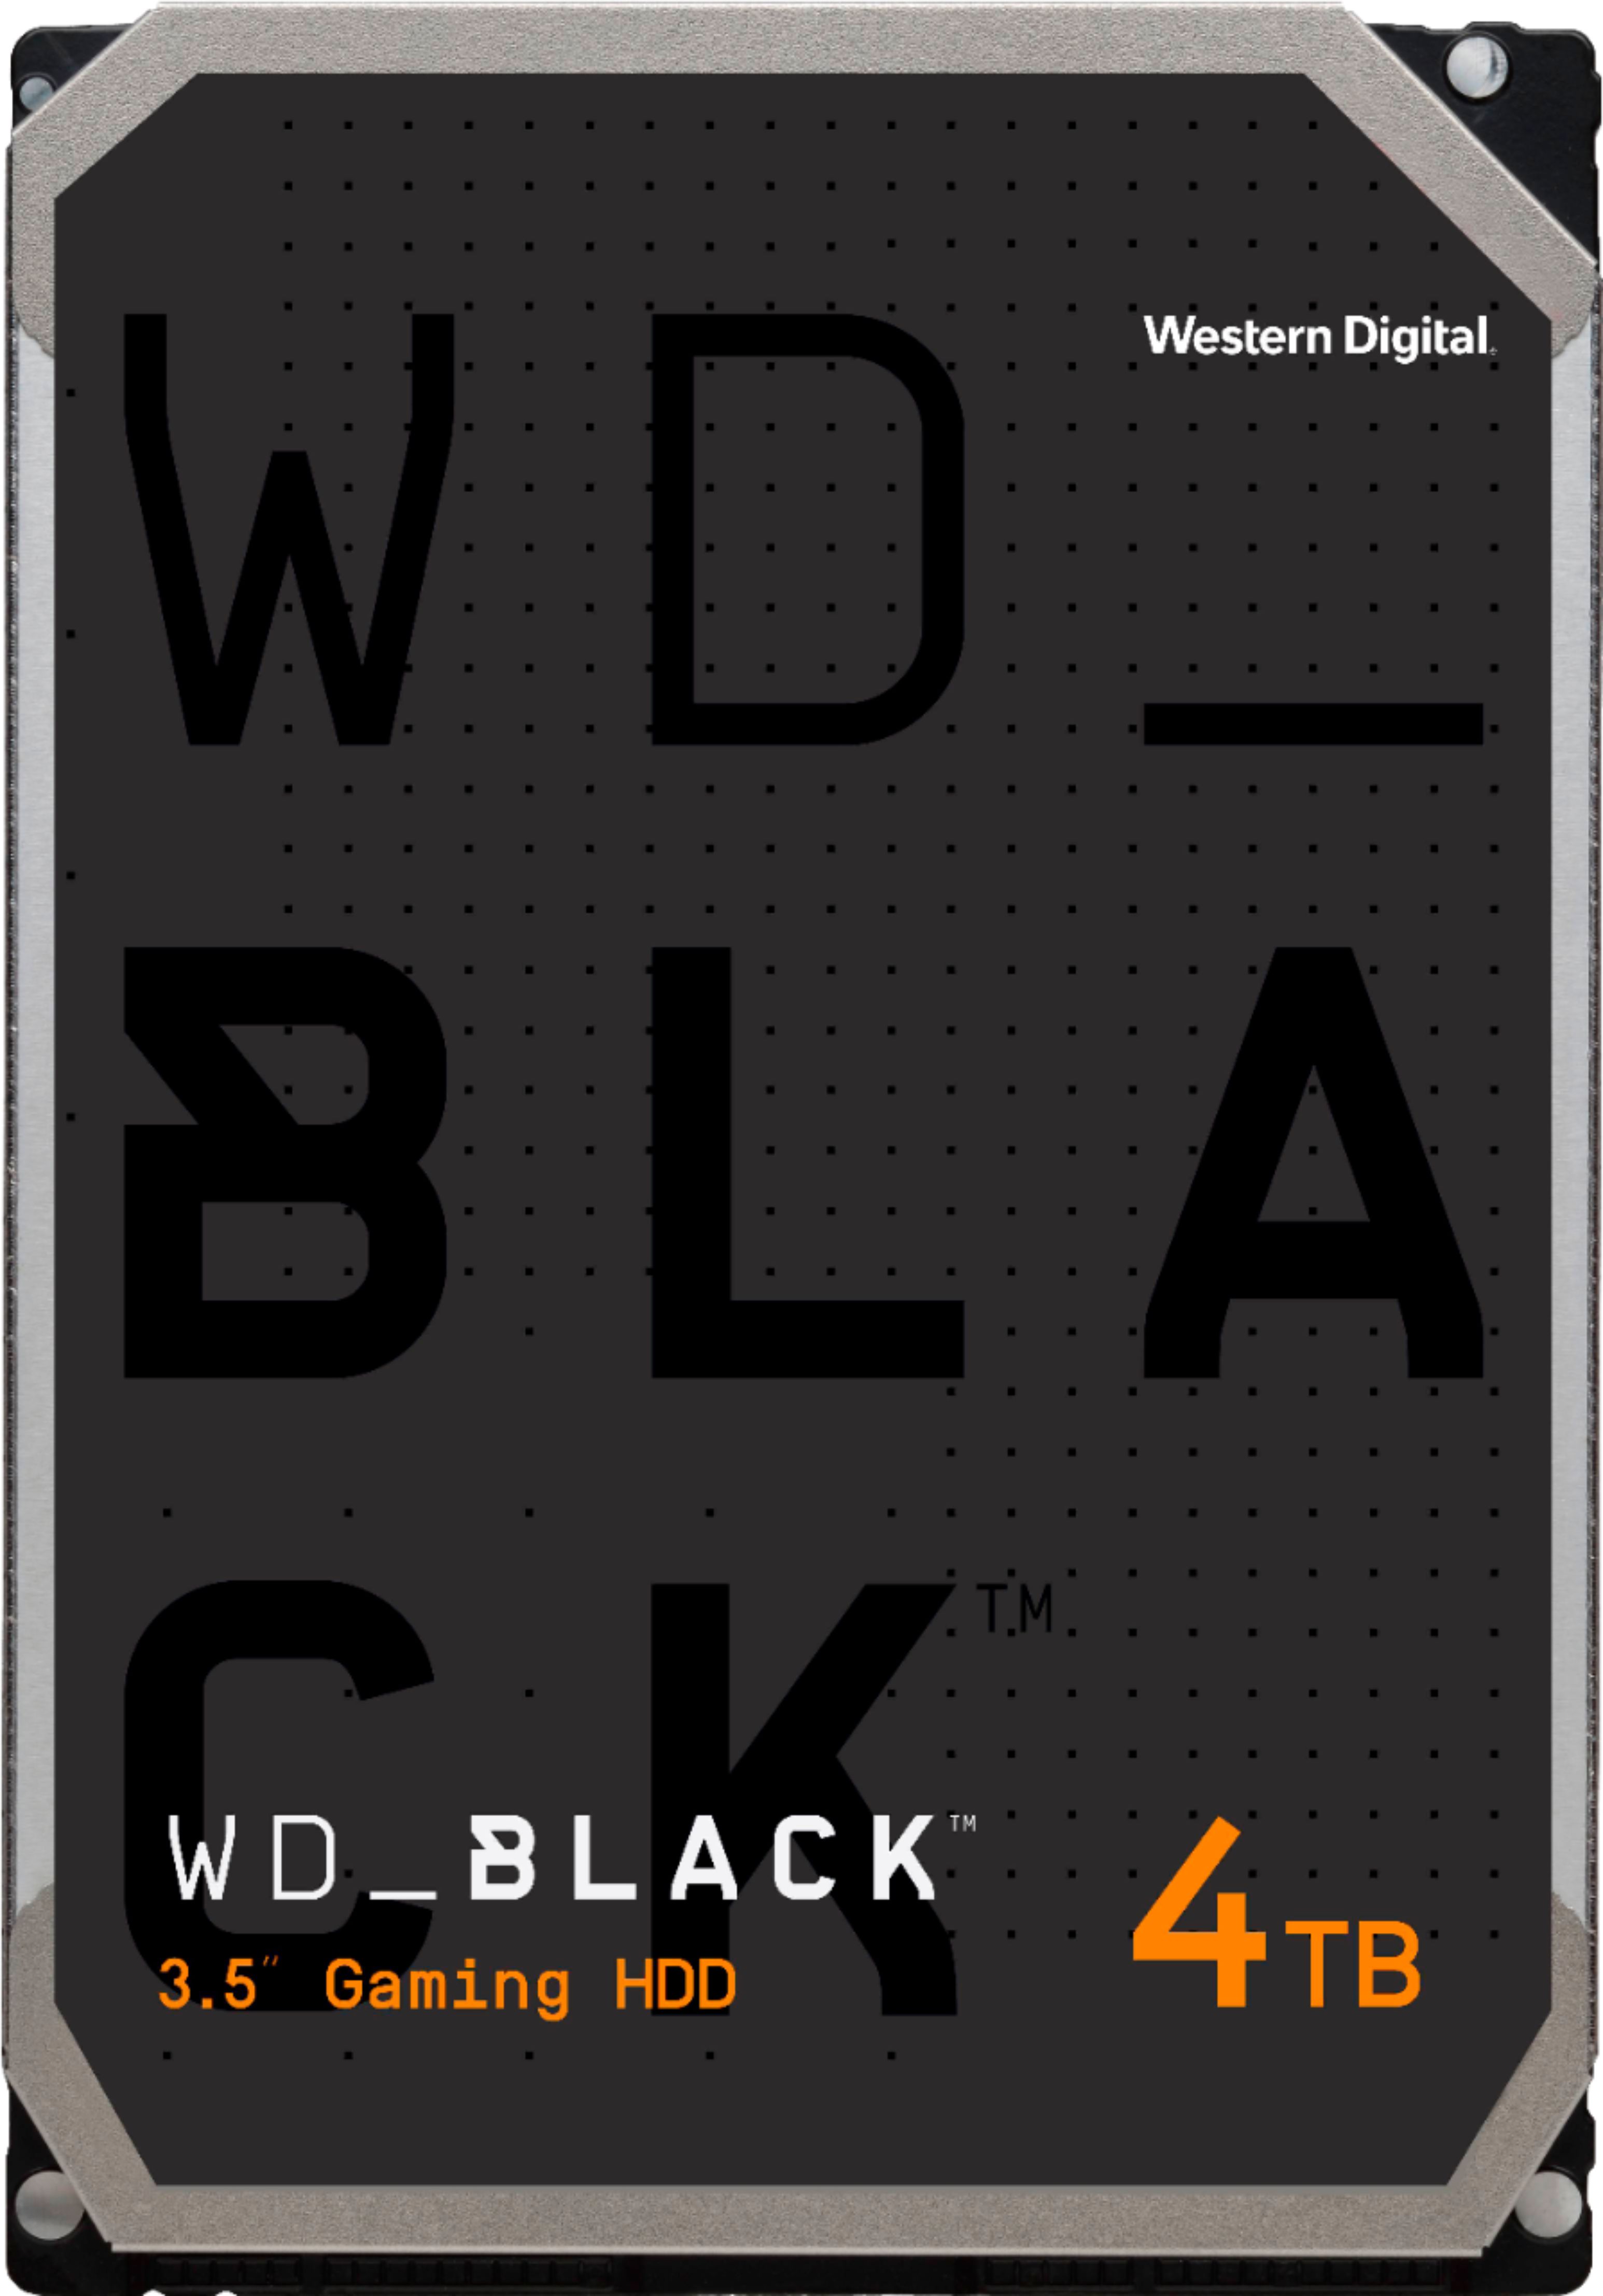 WD BLACK Gaming 4TB Internal SATA Hard Drive for Desktops